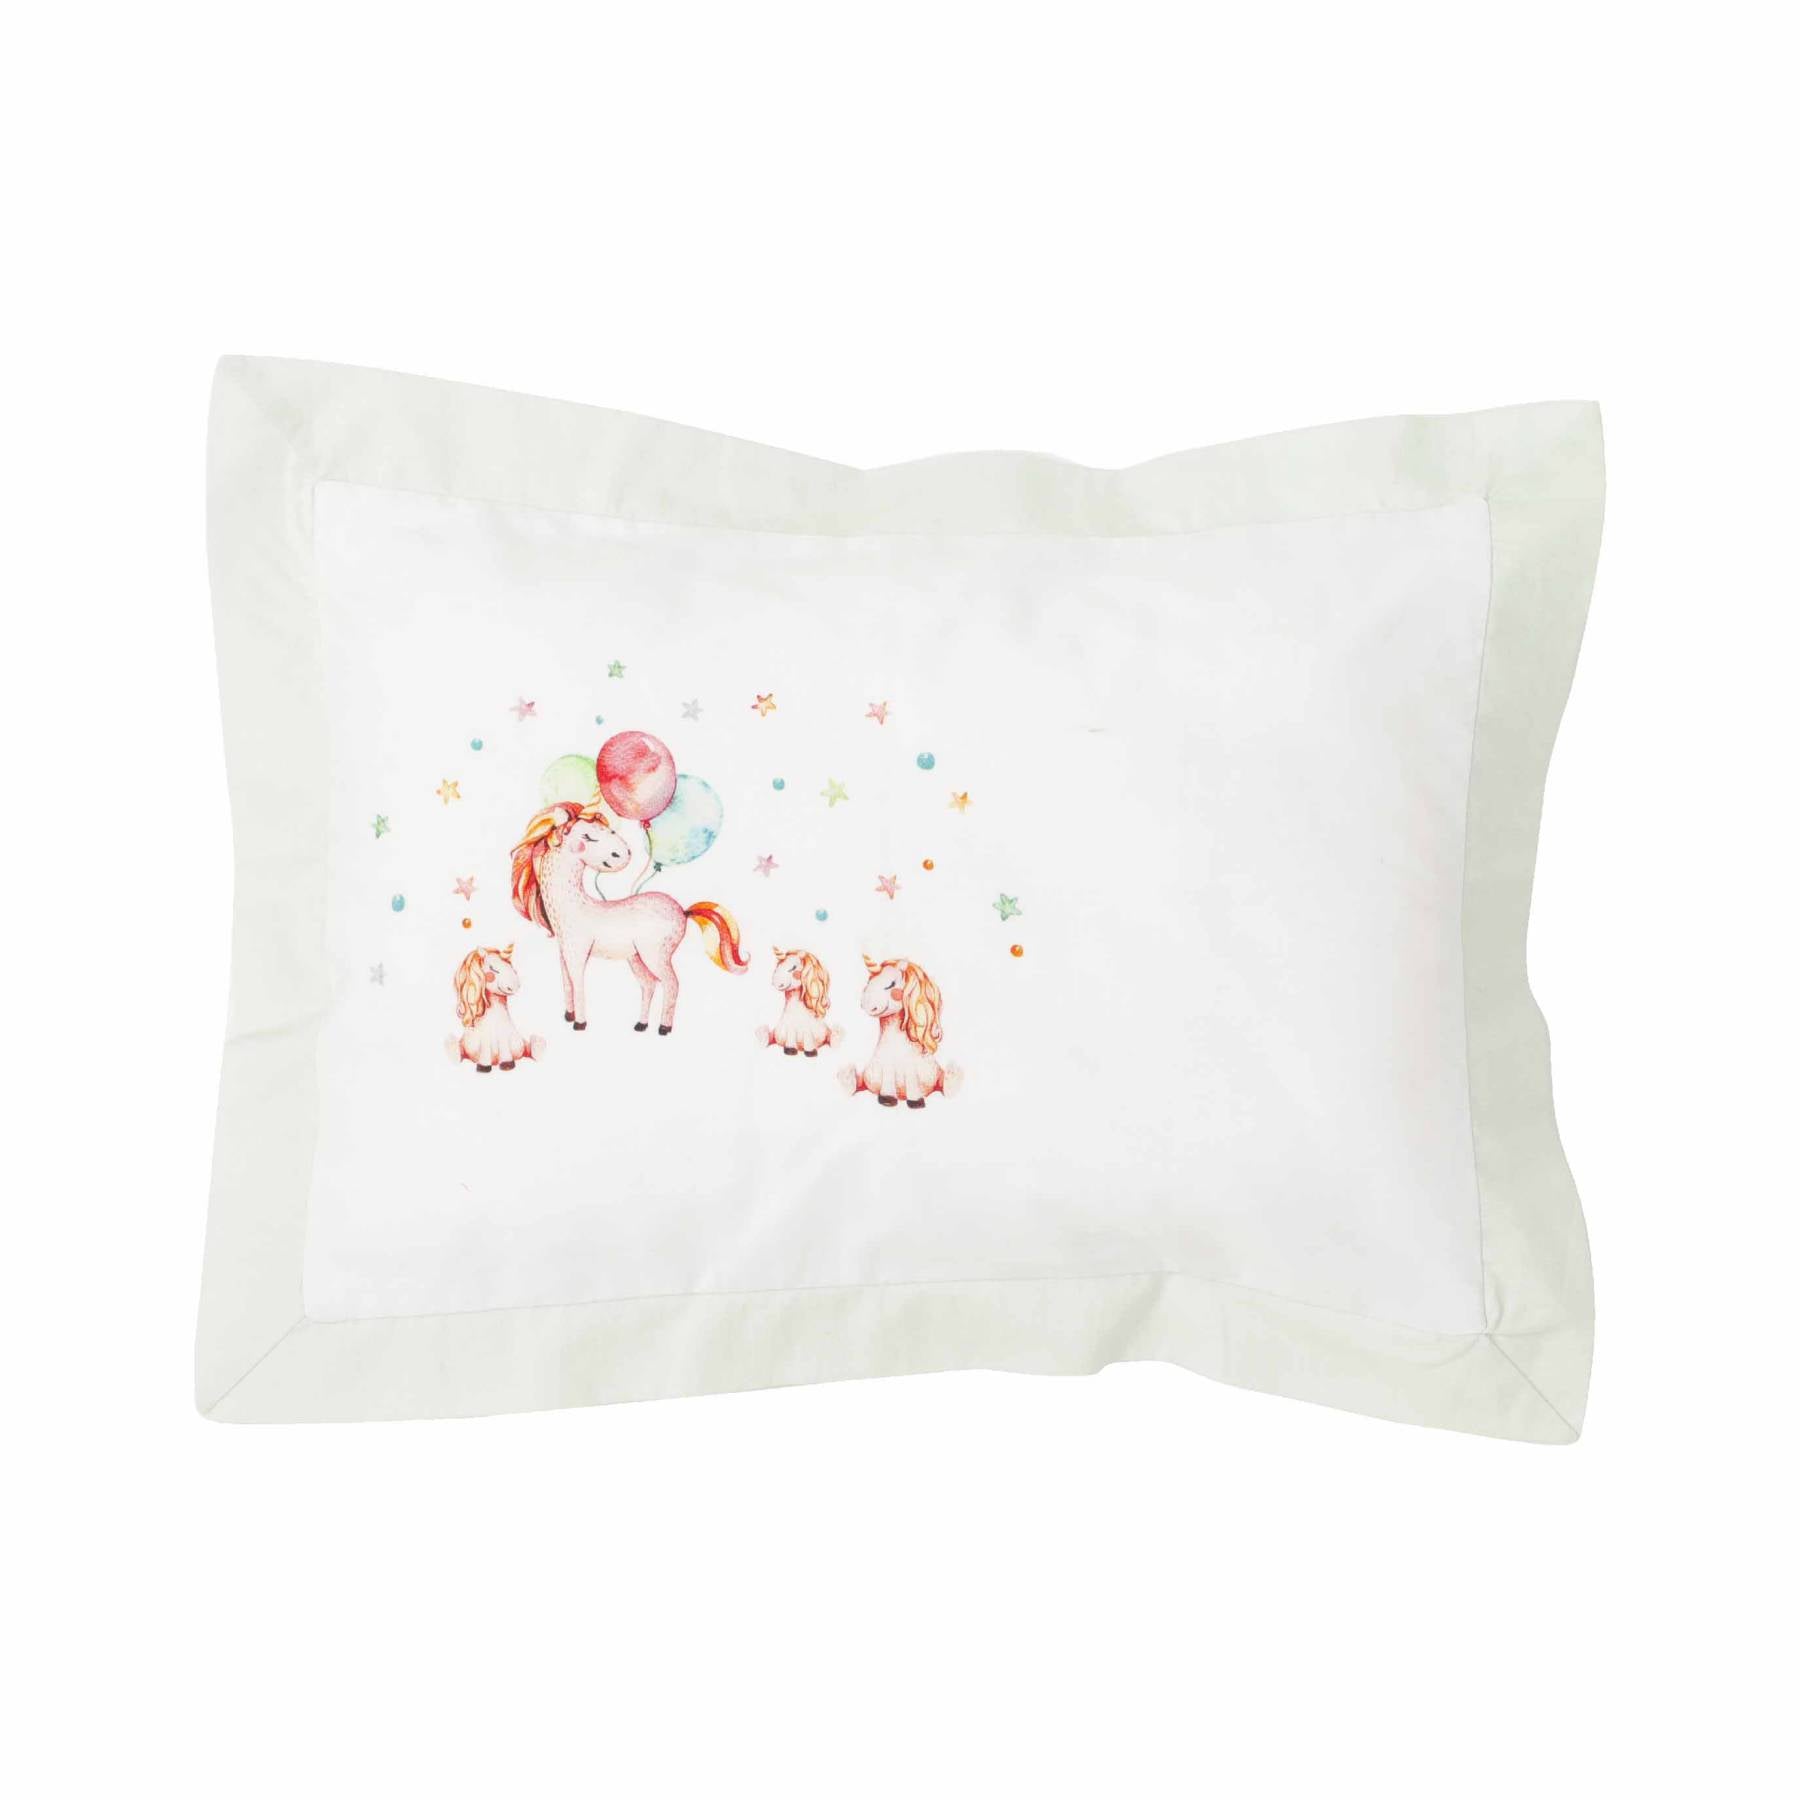 Miss Bella the Unicorn - Baby Pillow